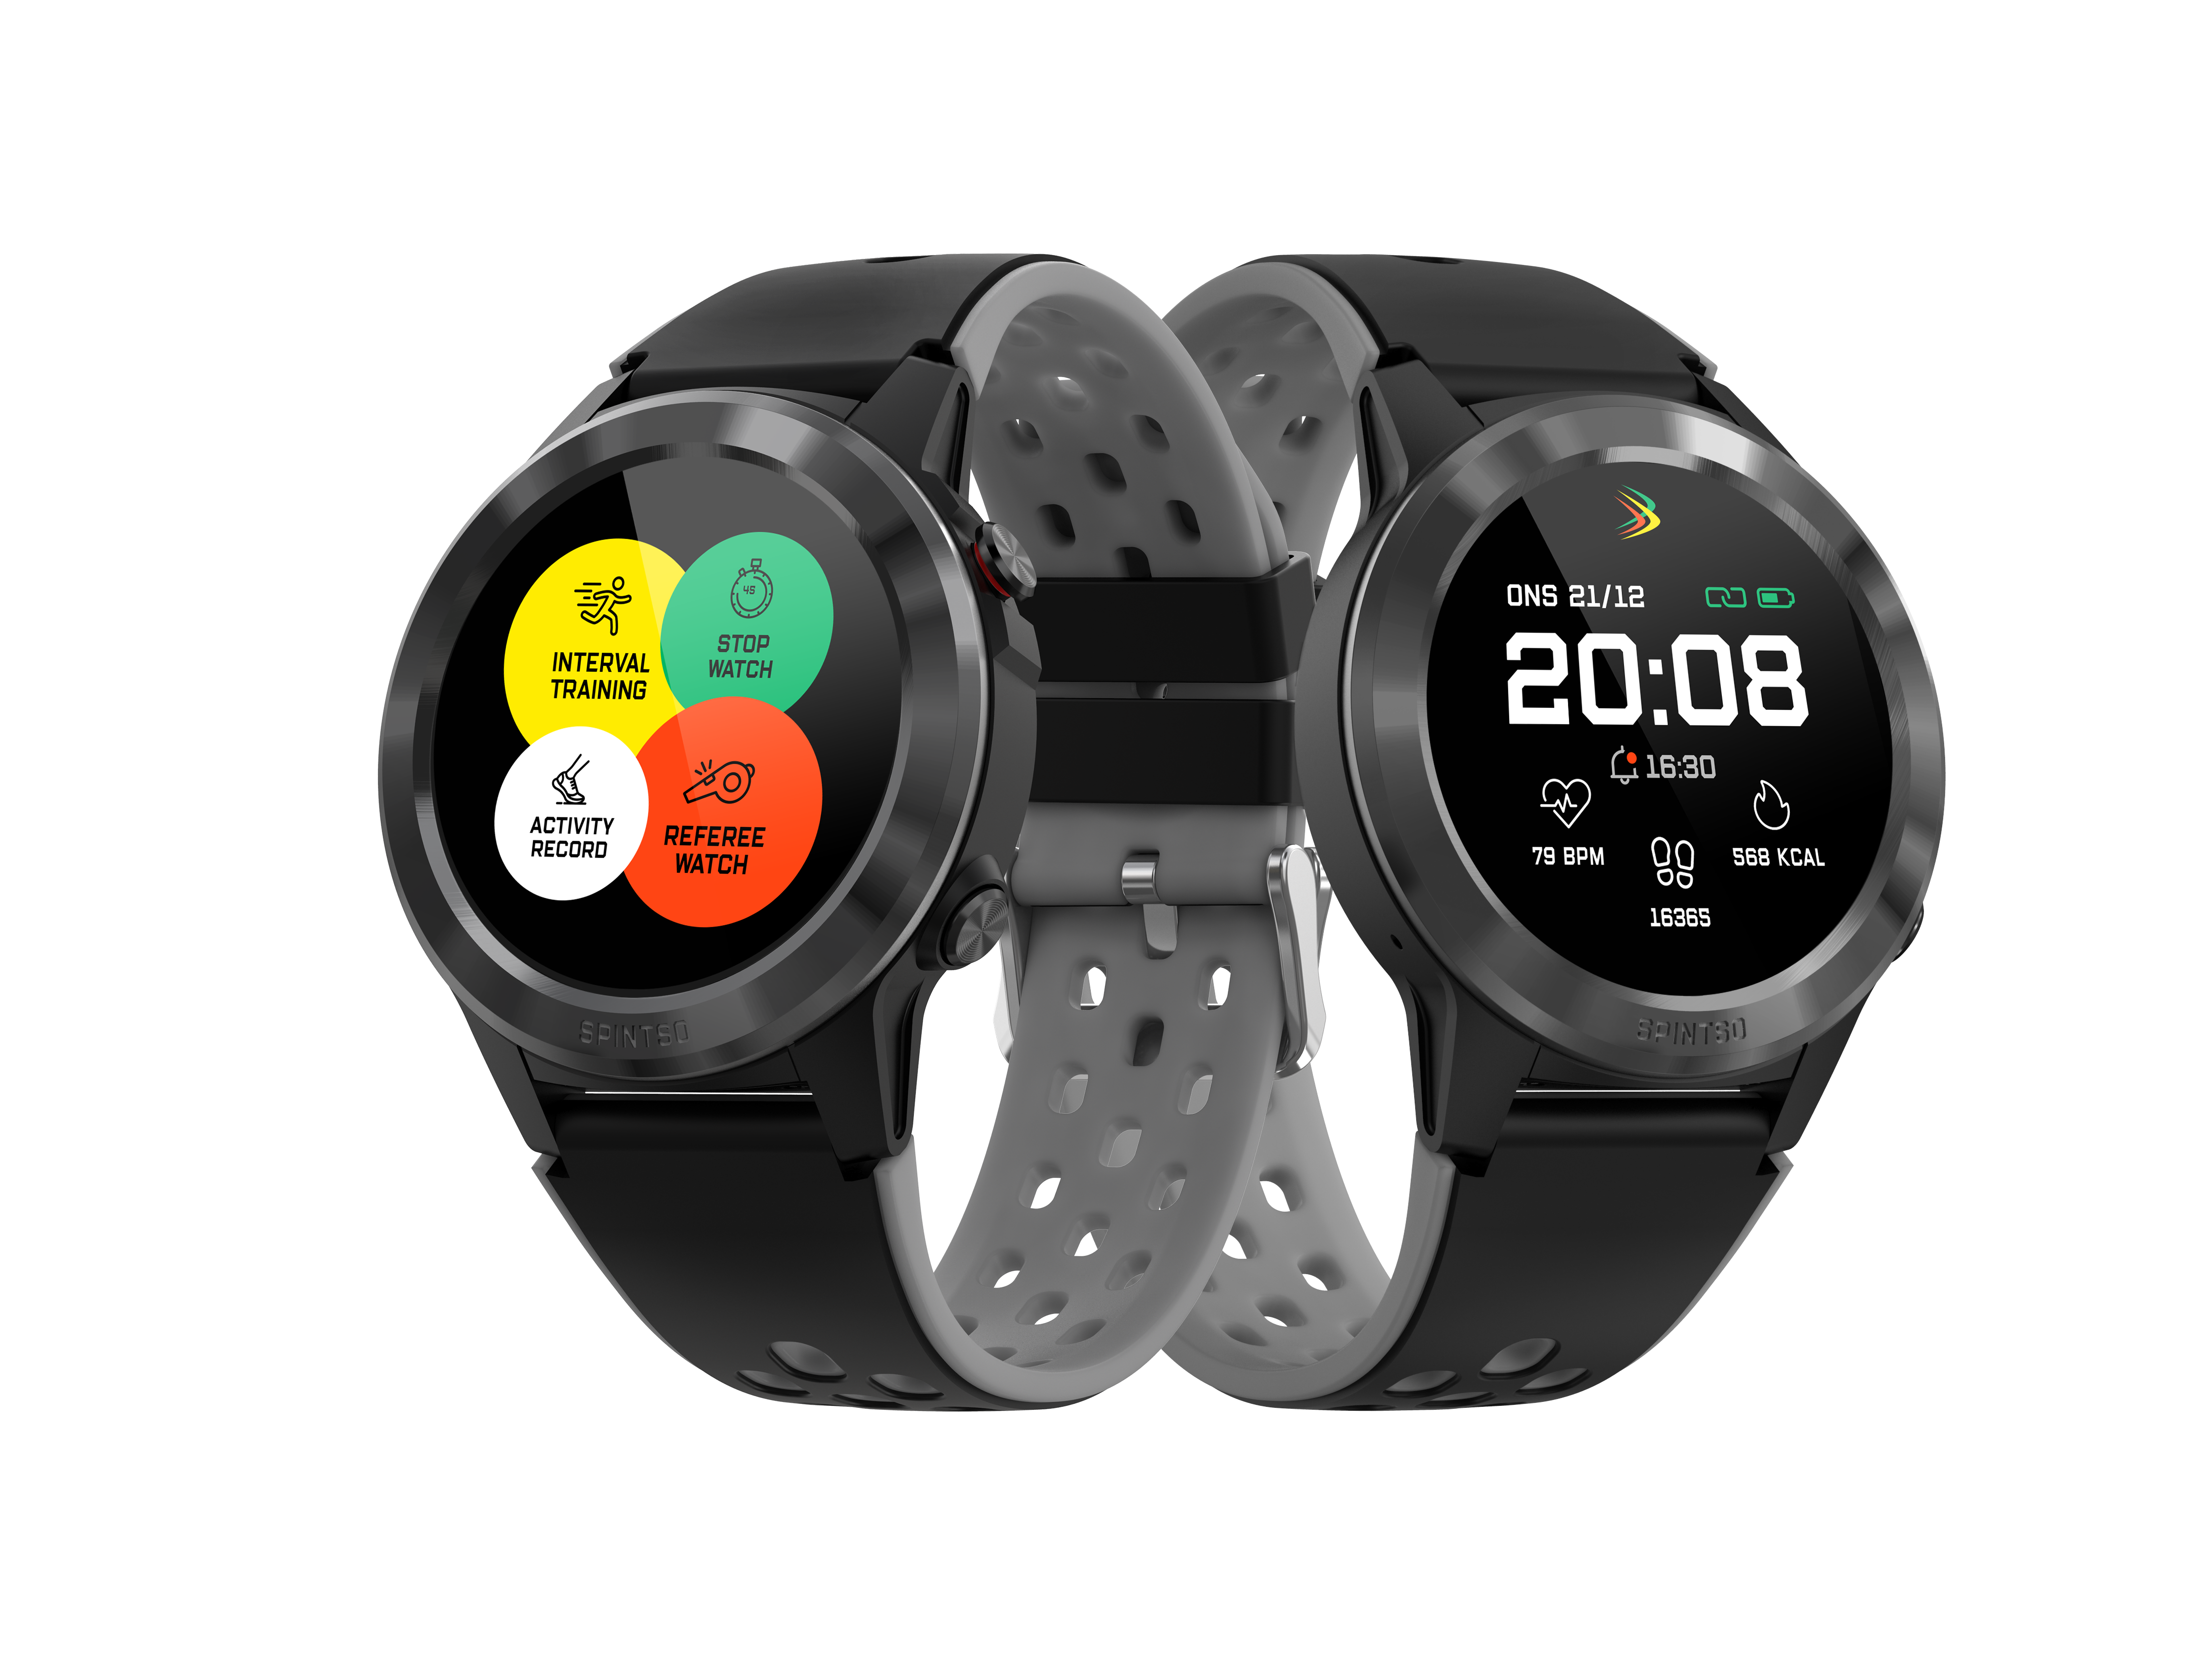 SPINTSO S1 Pro Referee Watch with GPS - A&H International